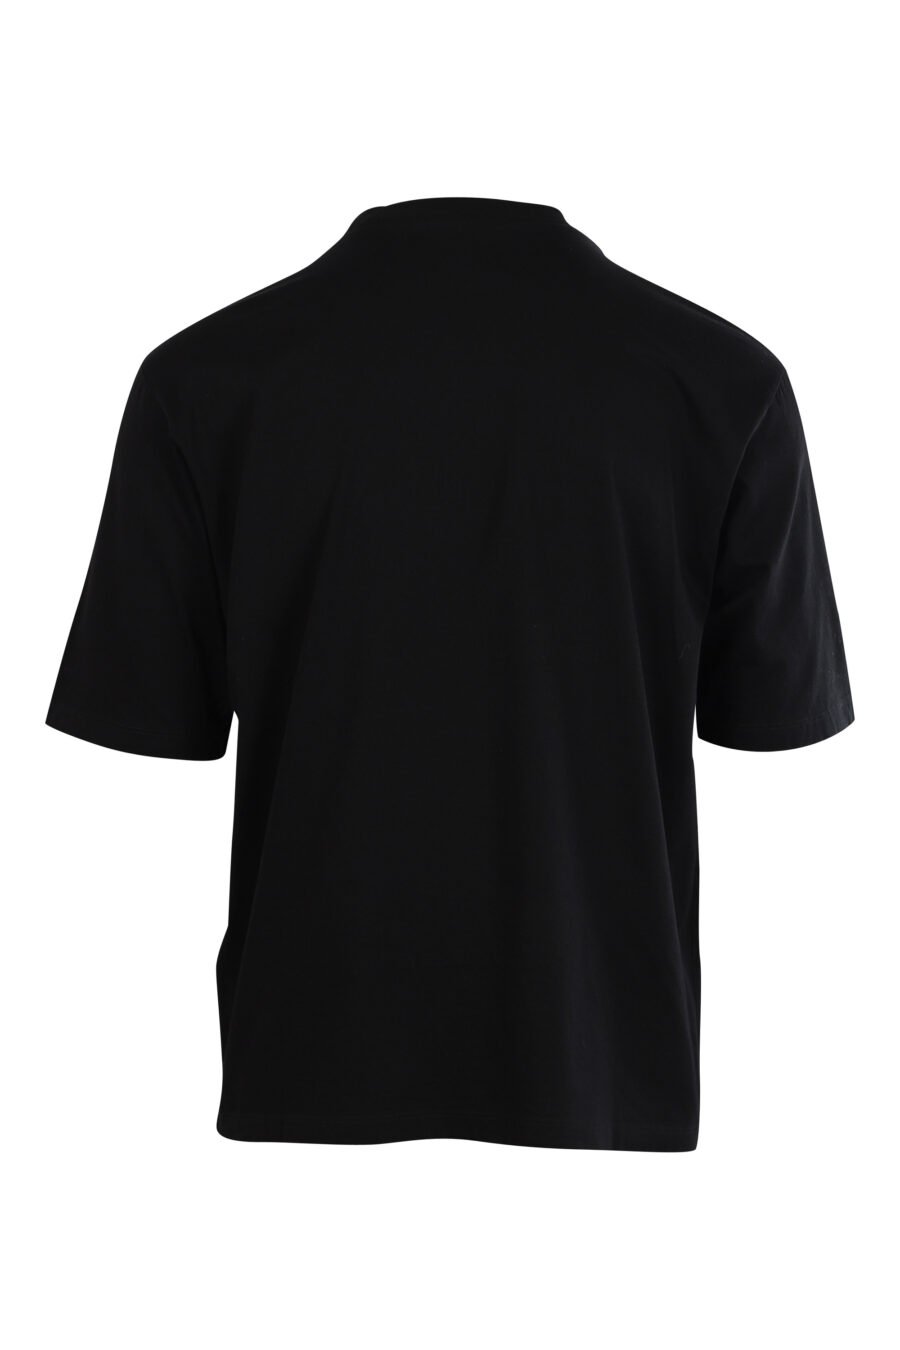 T-shirt noir "Oversized" avec logo contrasté - 8054148006570 2